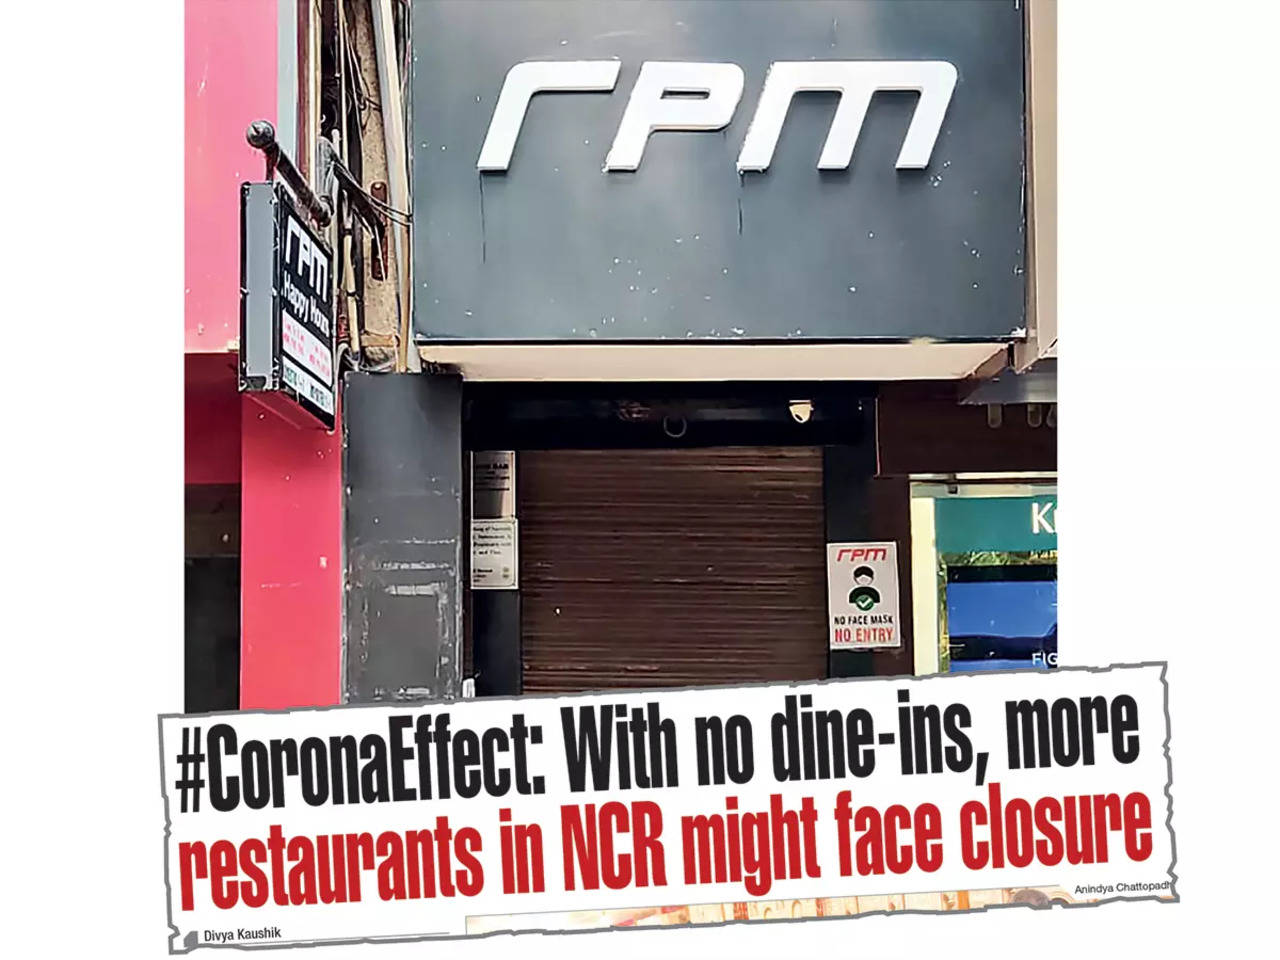 RPM Club at Vasant Vihar shuts down due to lack of business | Delhi News -  Times of India